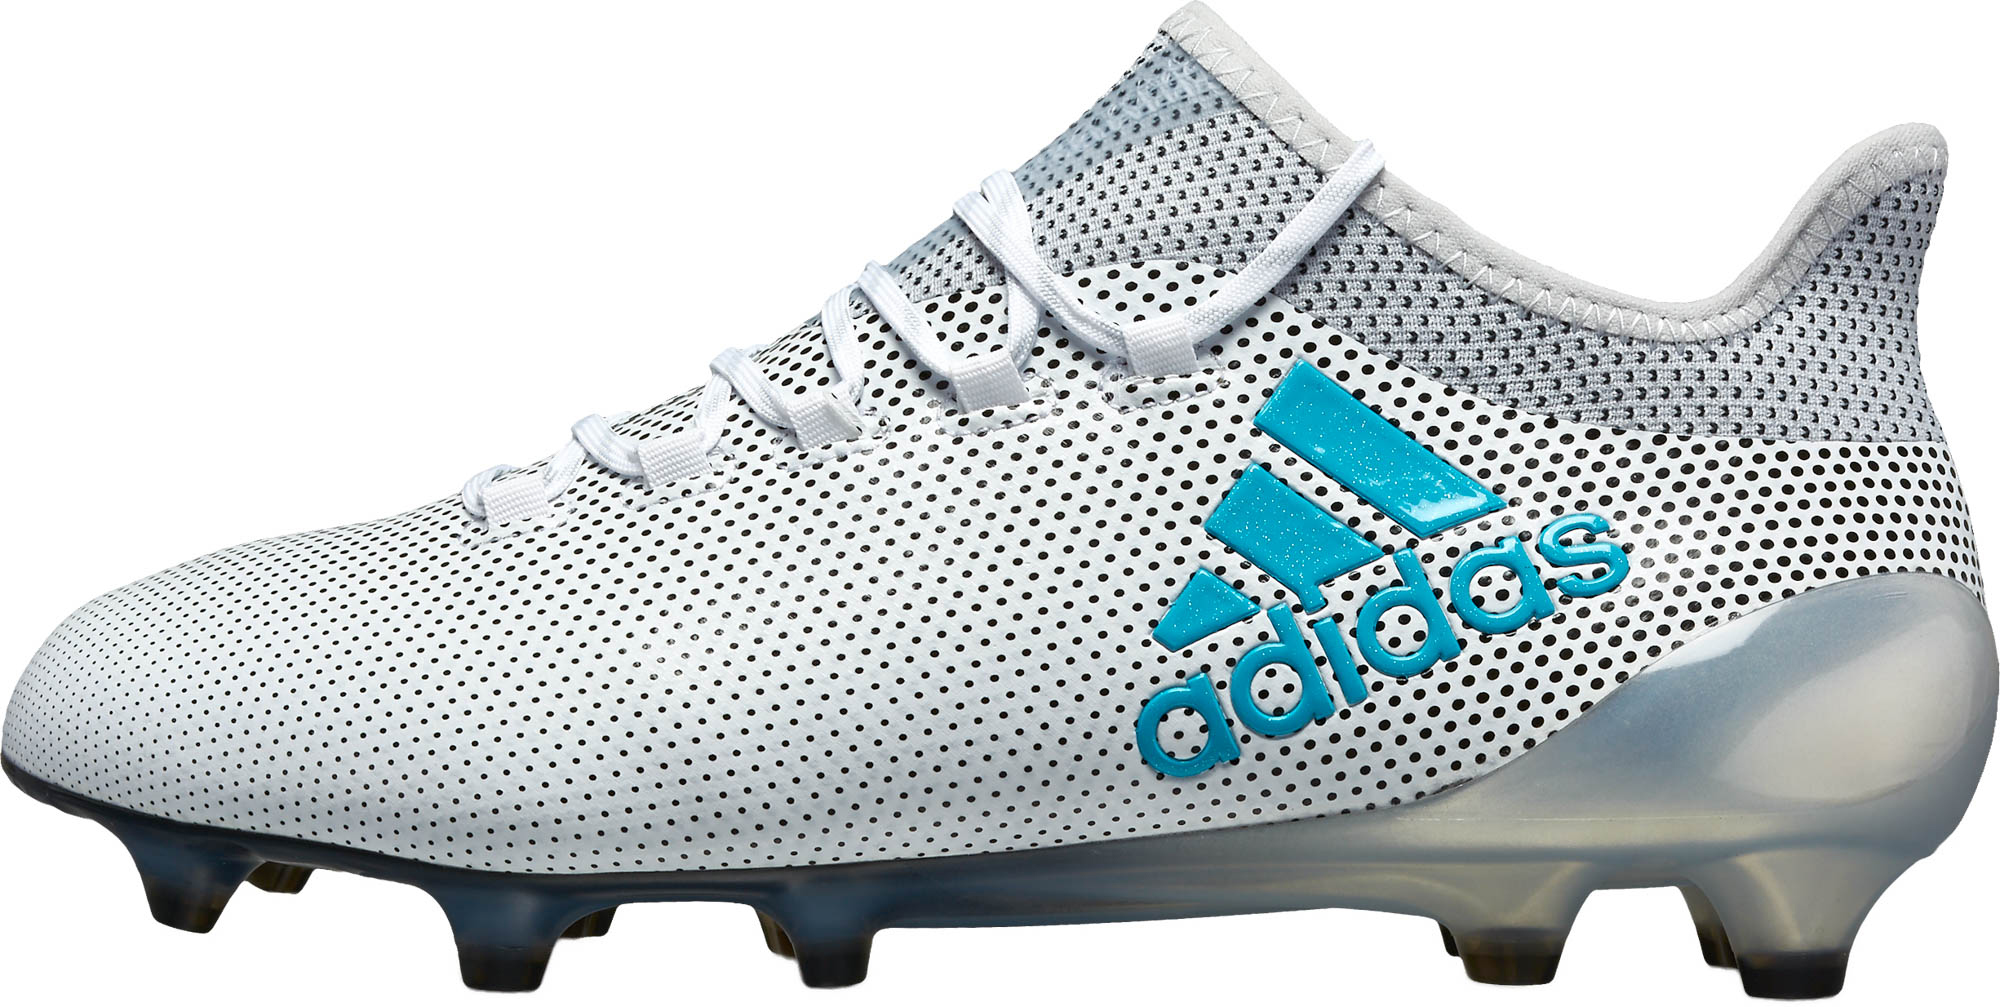 adidas X 17.1 FG Soccer Cleats - White & Energy Blue - Soccer Master